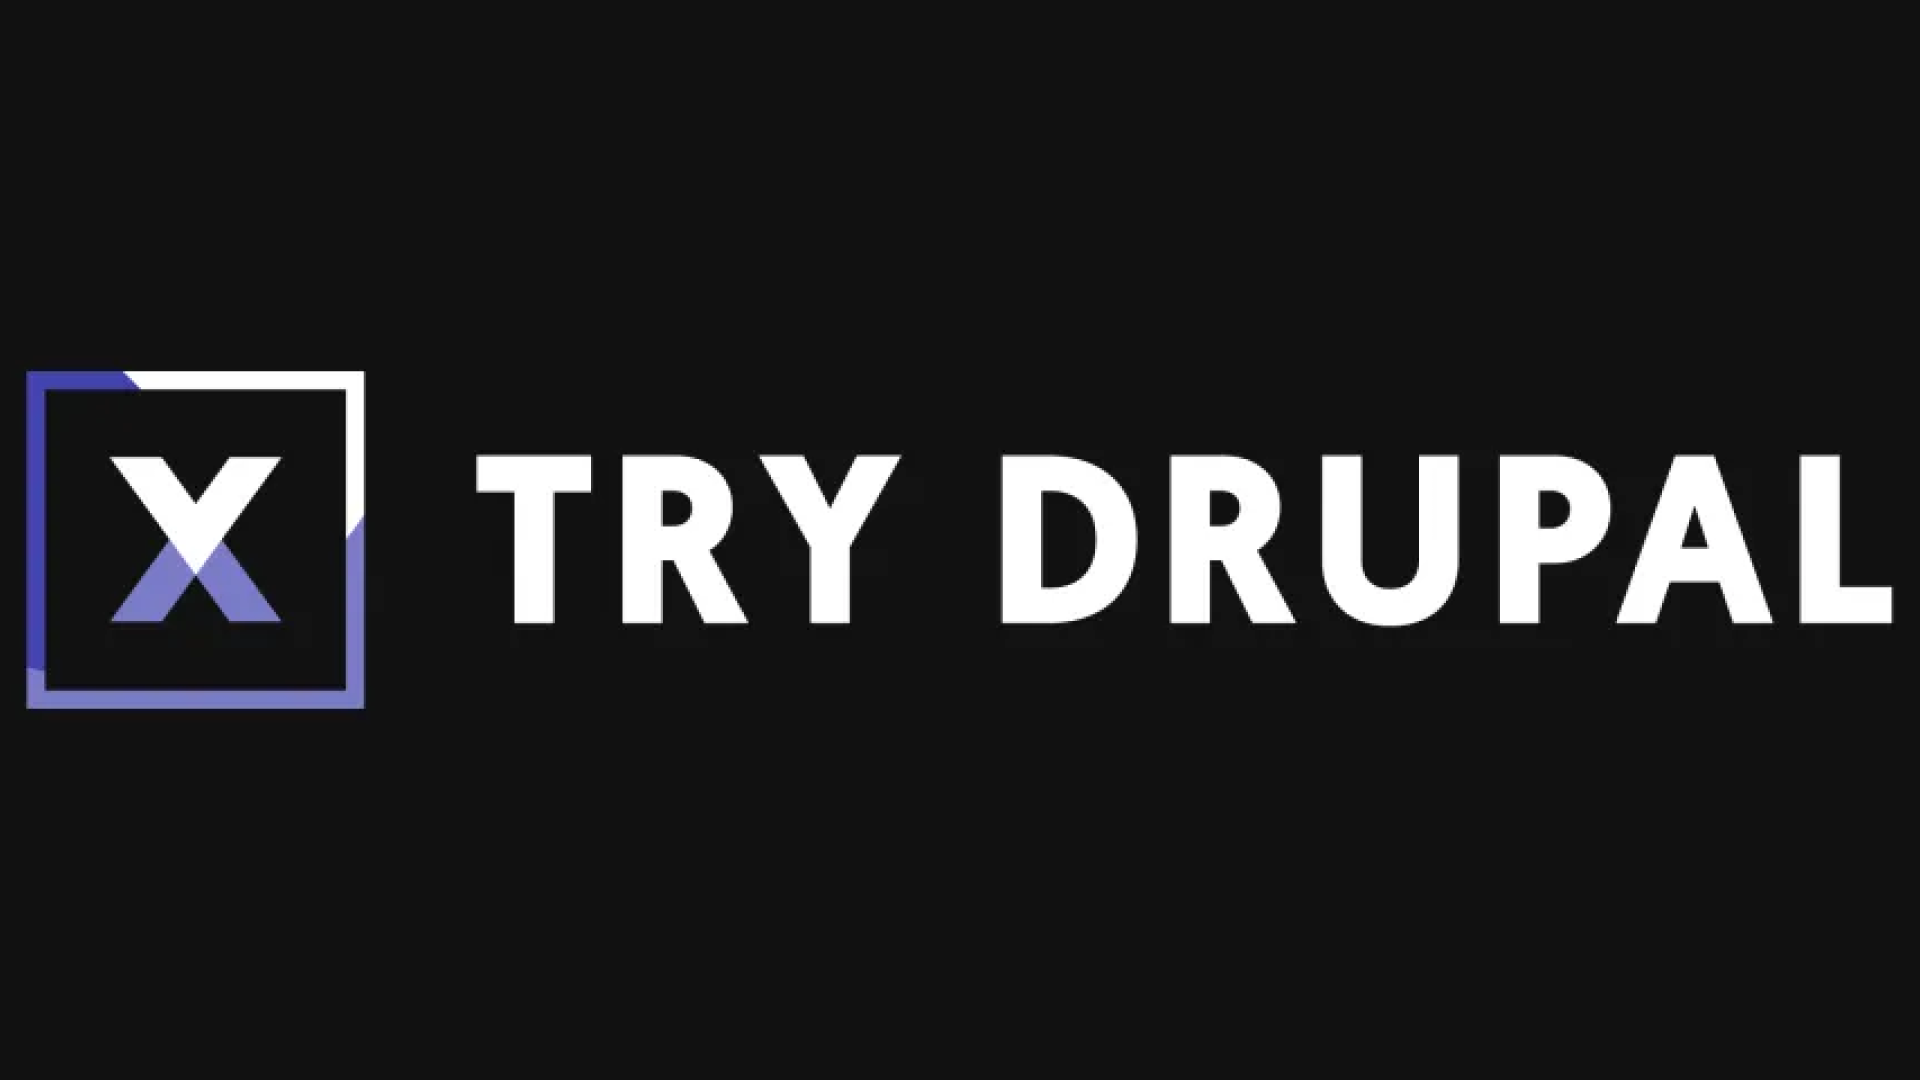 Try Drupal